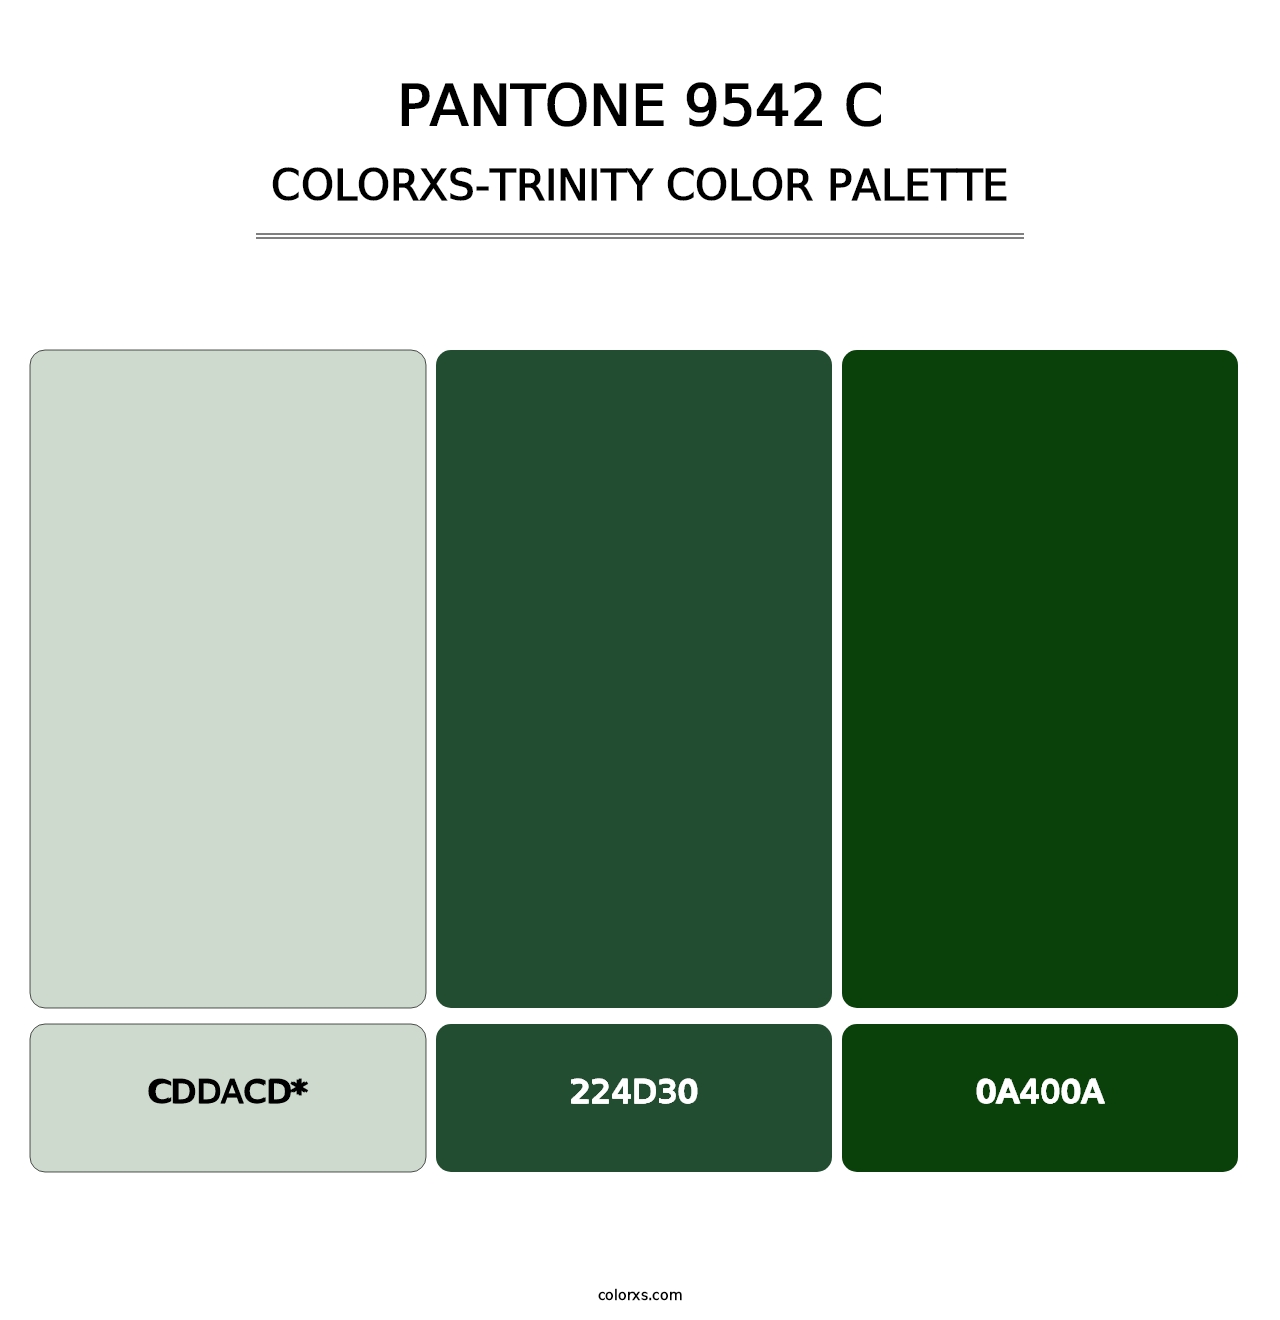 PANTONE 9542 C - Colorxs Trinity Palette